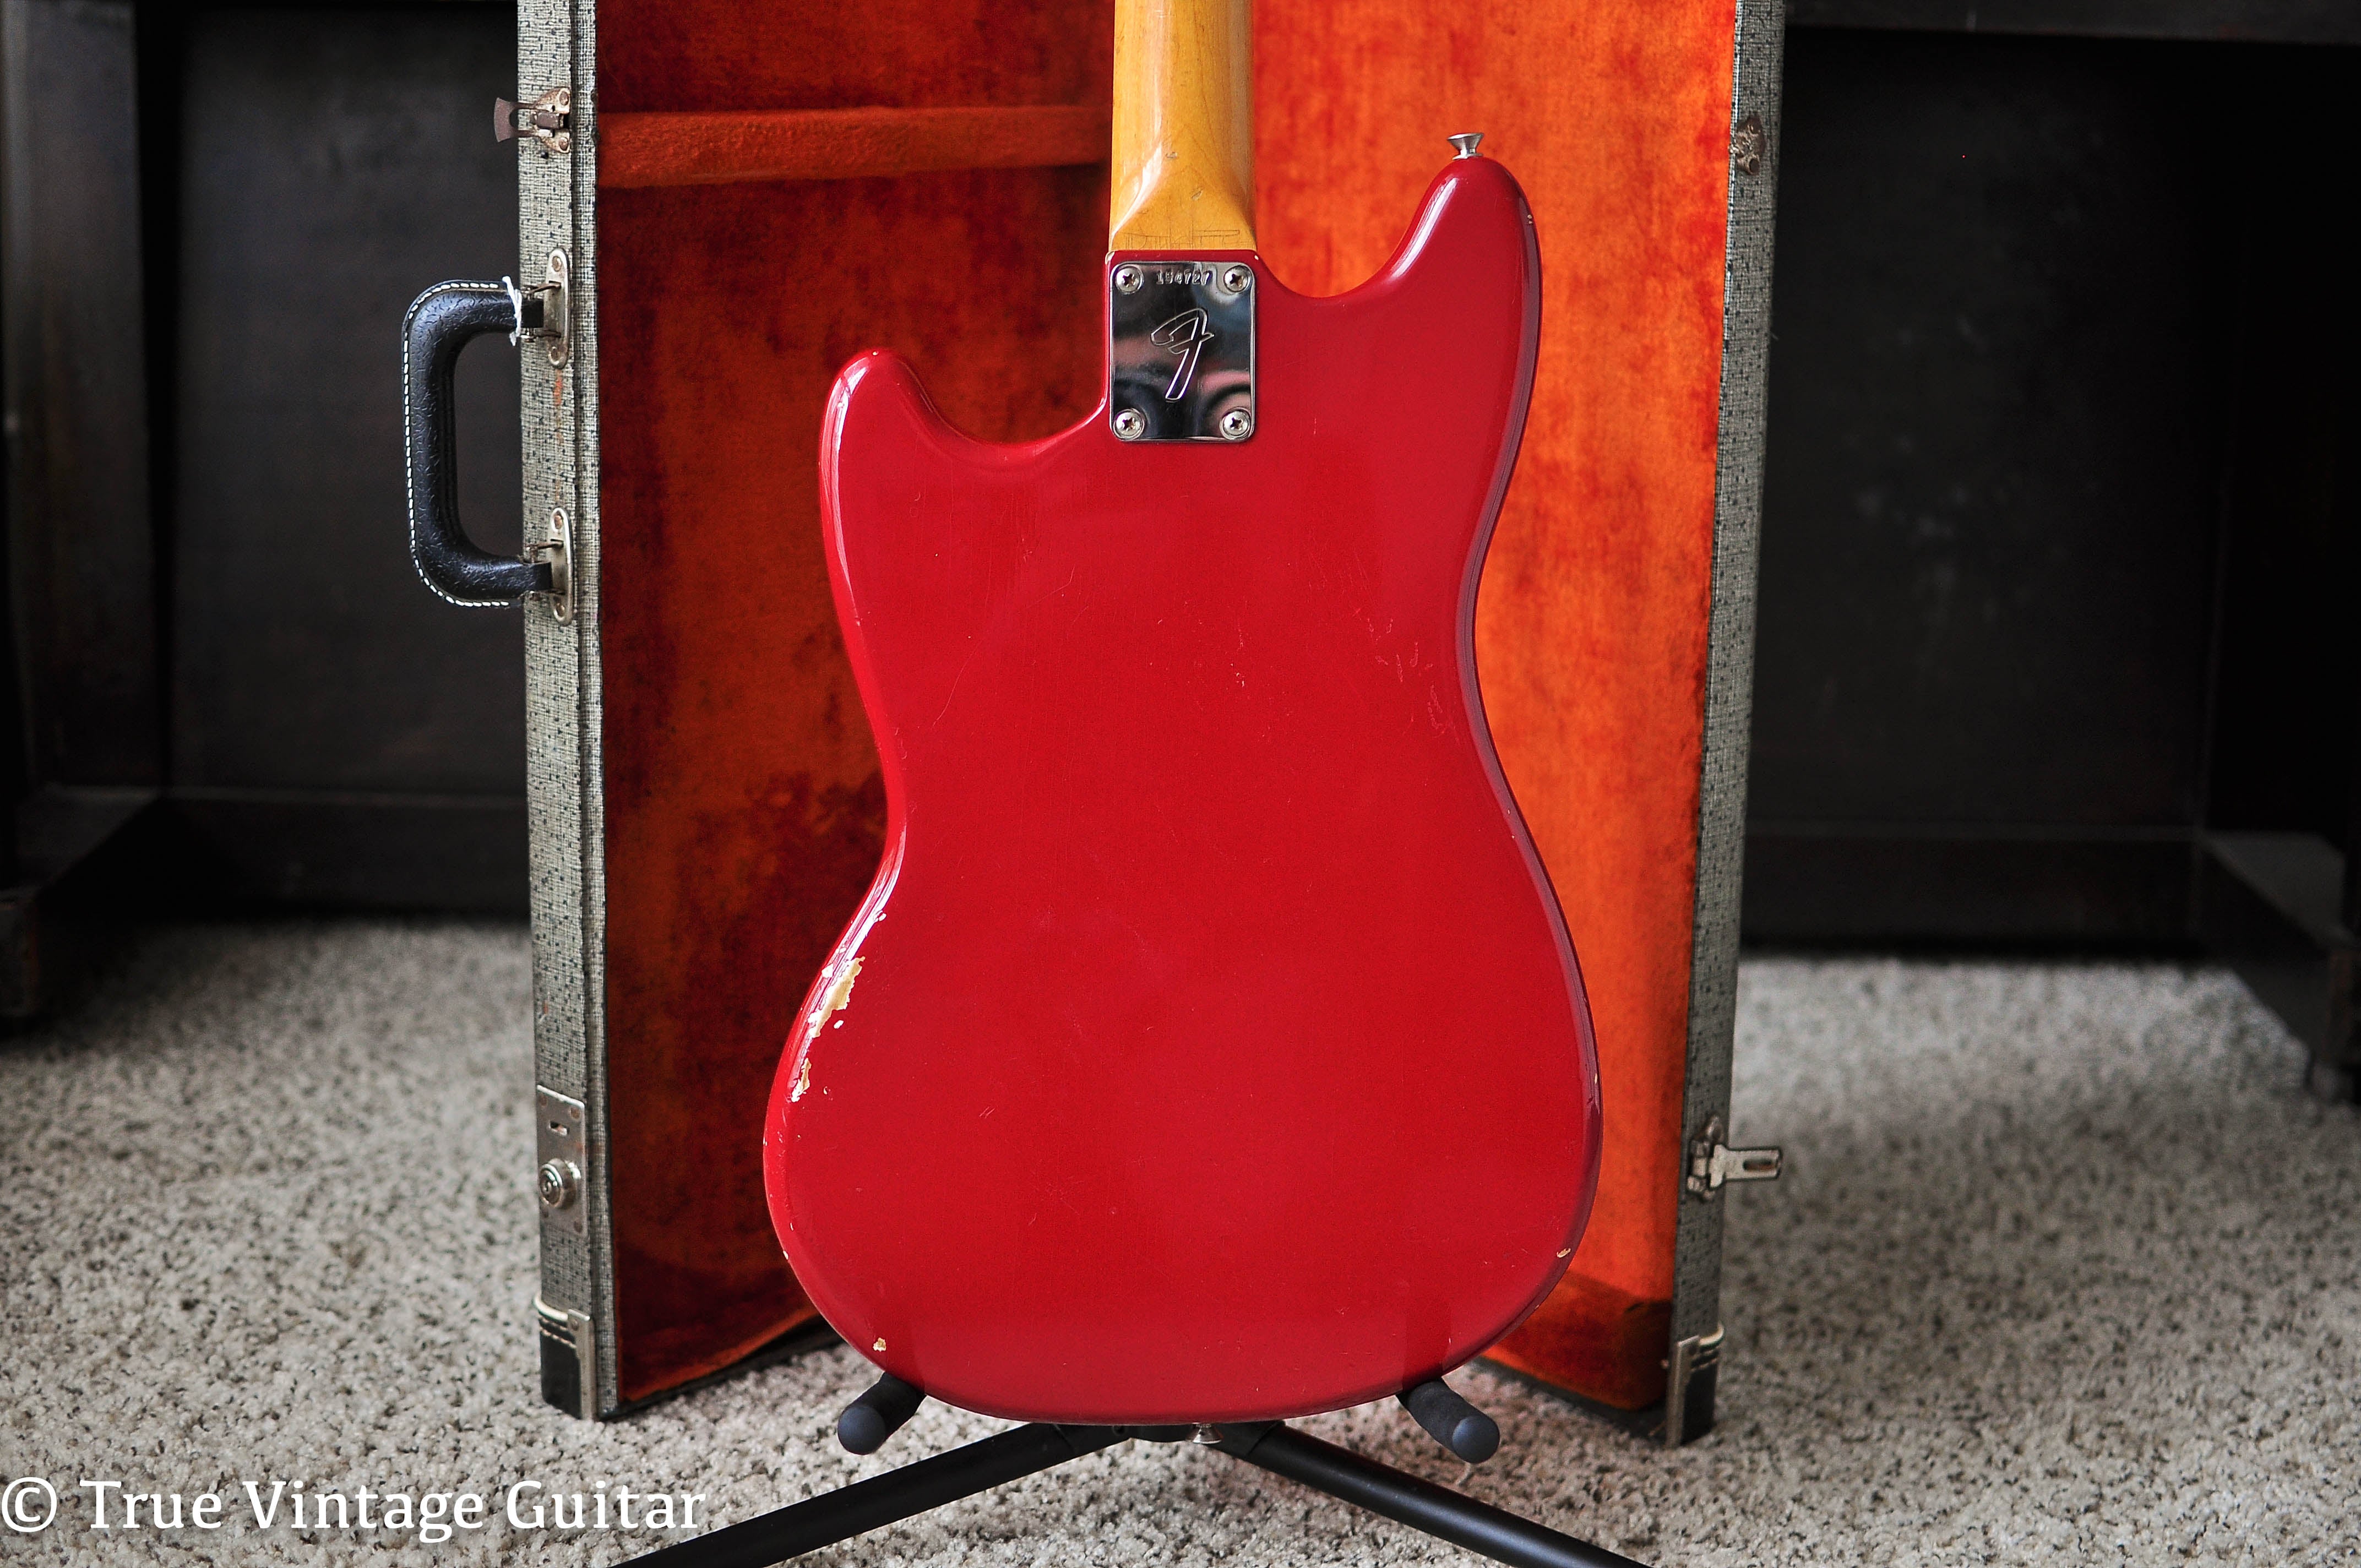 Fender Mustang red guitar 1966